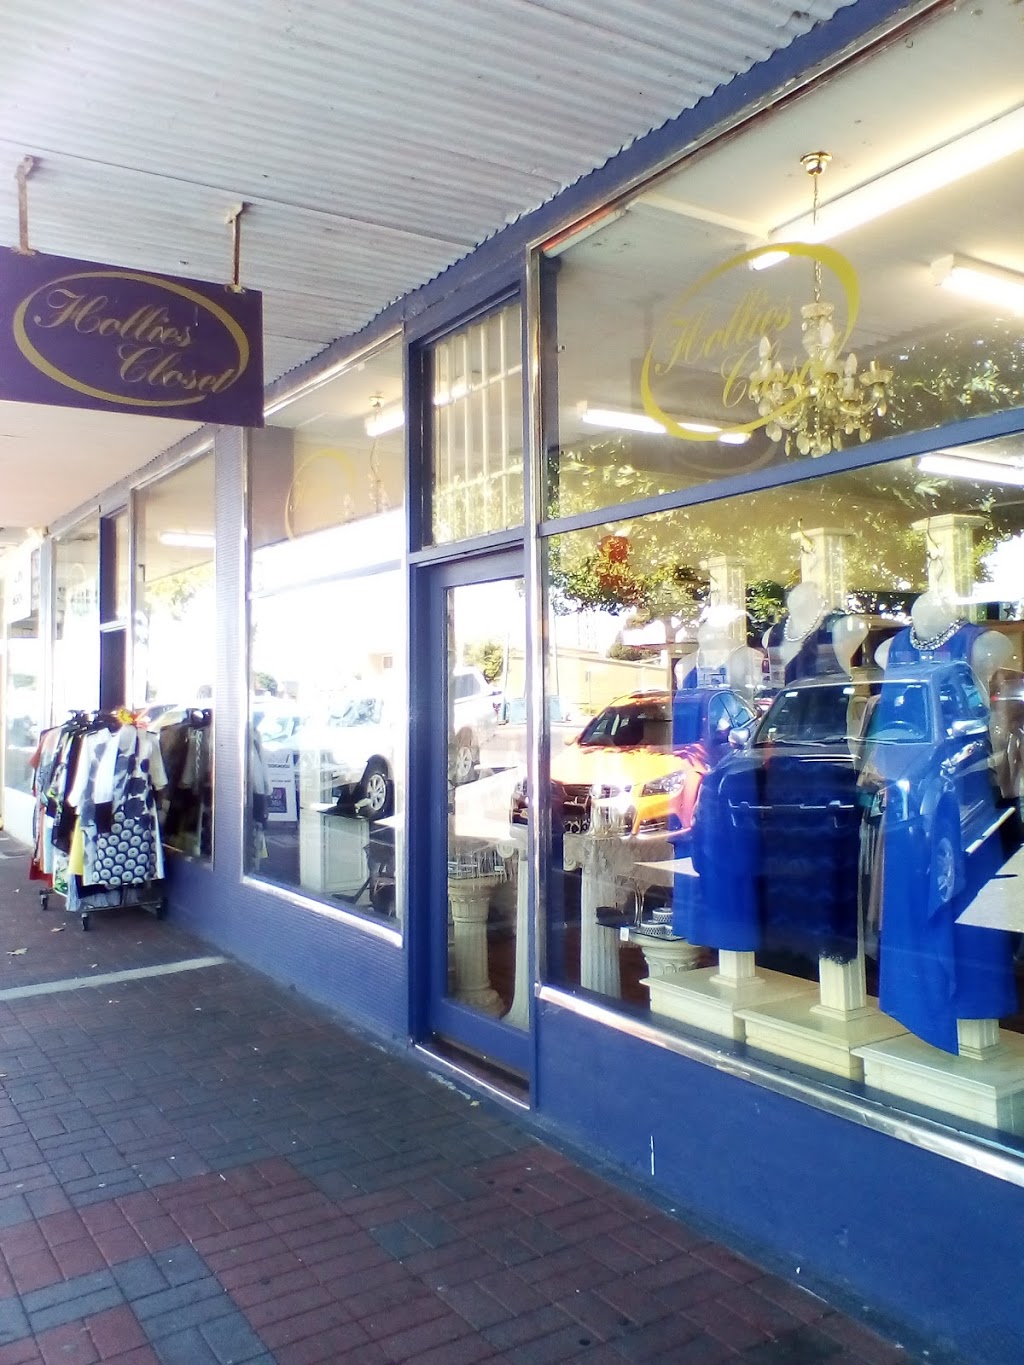 Hollies Closet | clothing store | 80 Albert St, Moe VIC 3825, Australia | 0351261166 OR +61 3 5126 1166